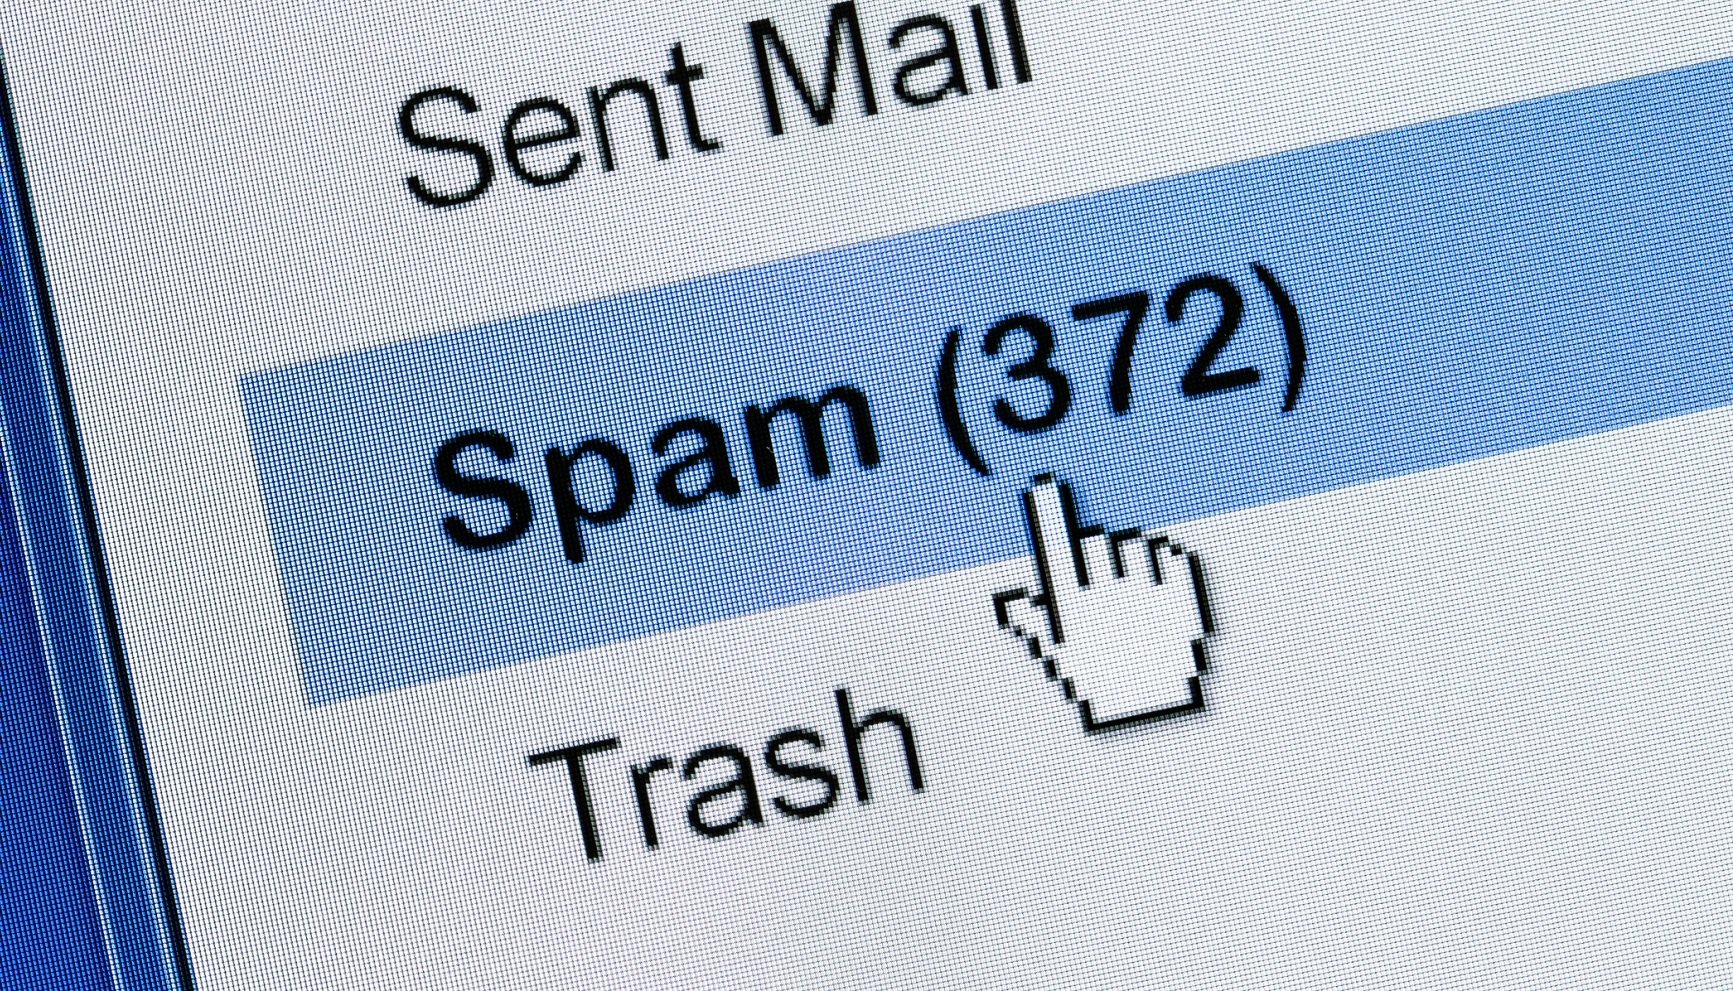 email de spam